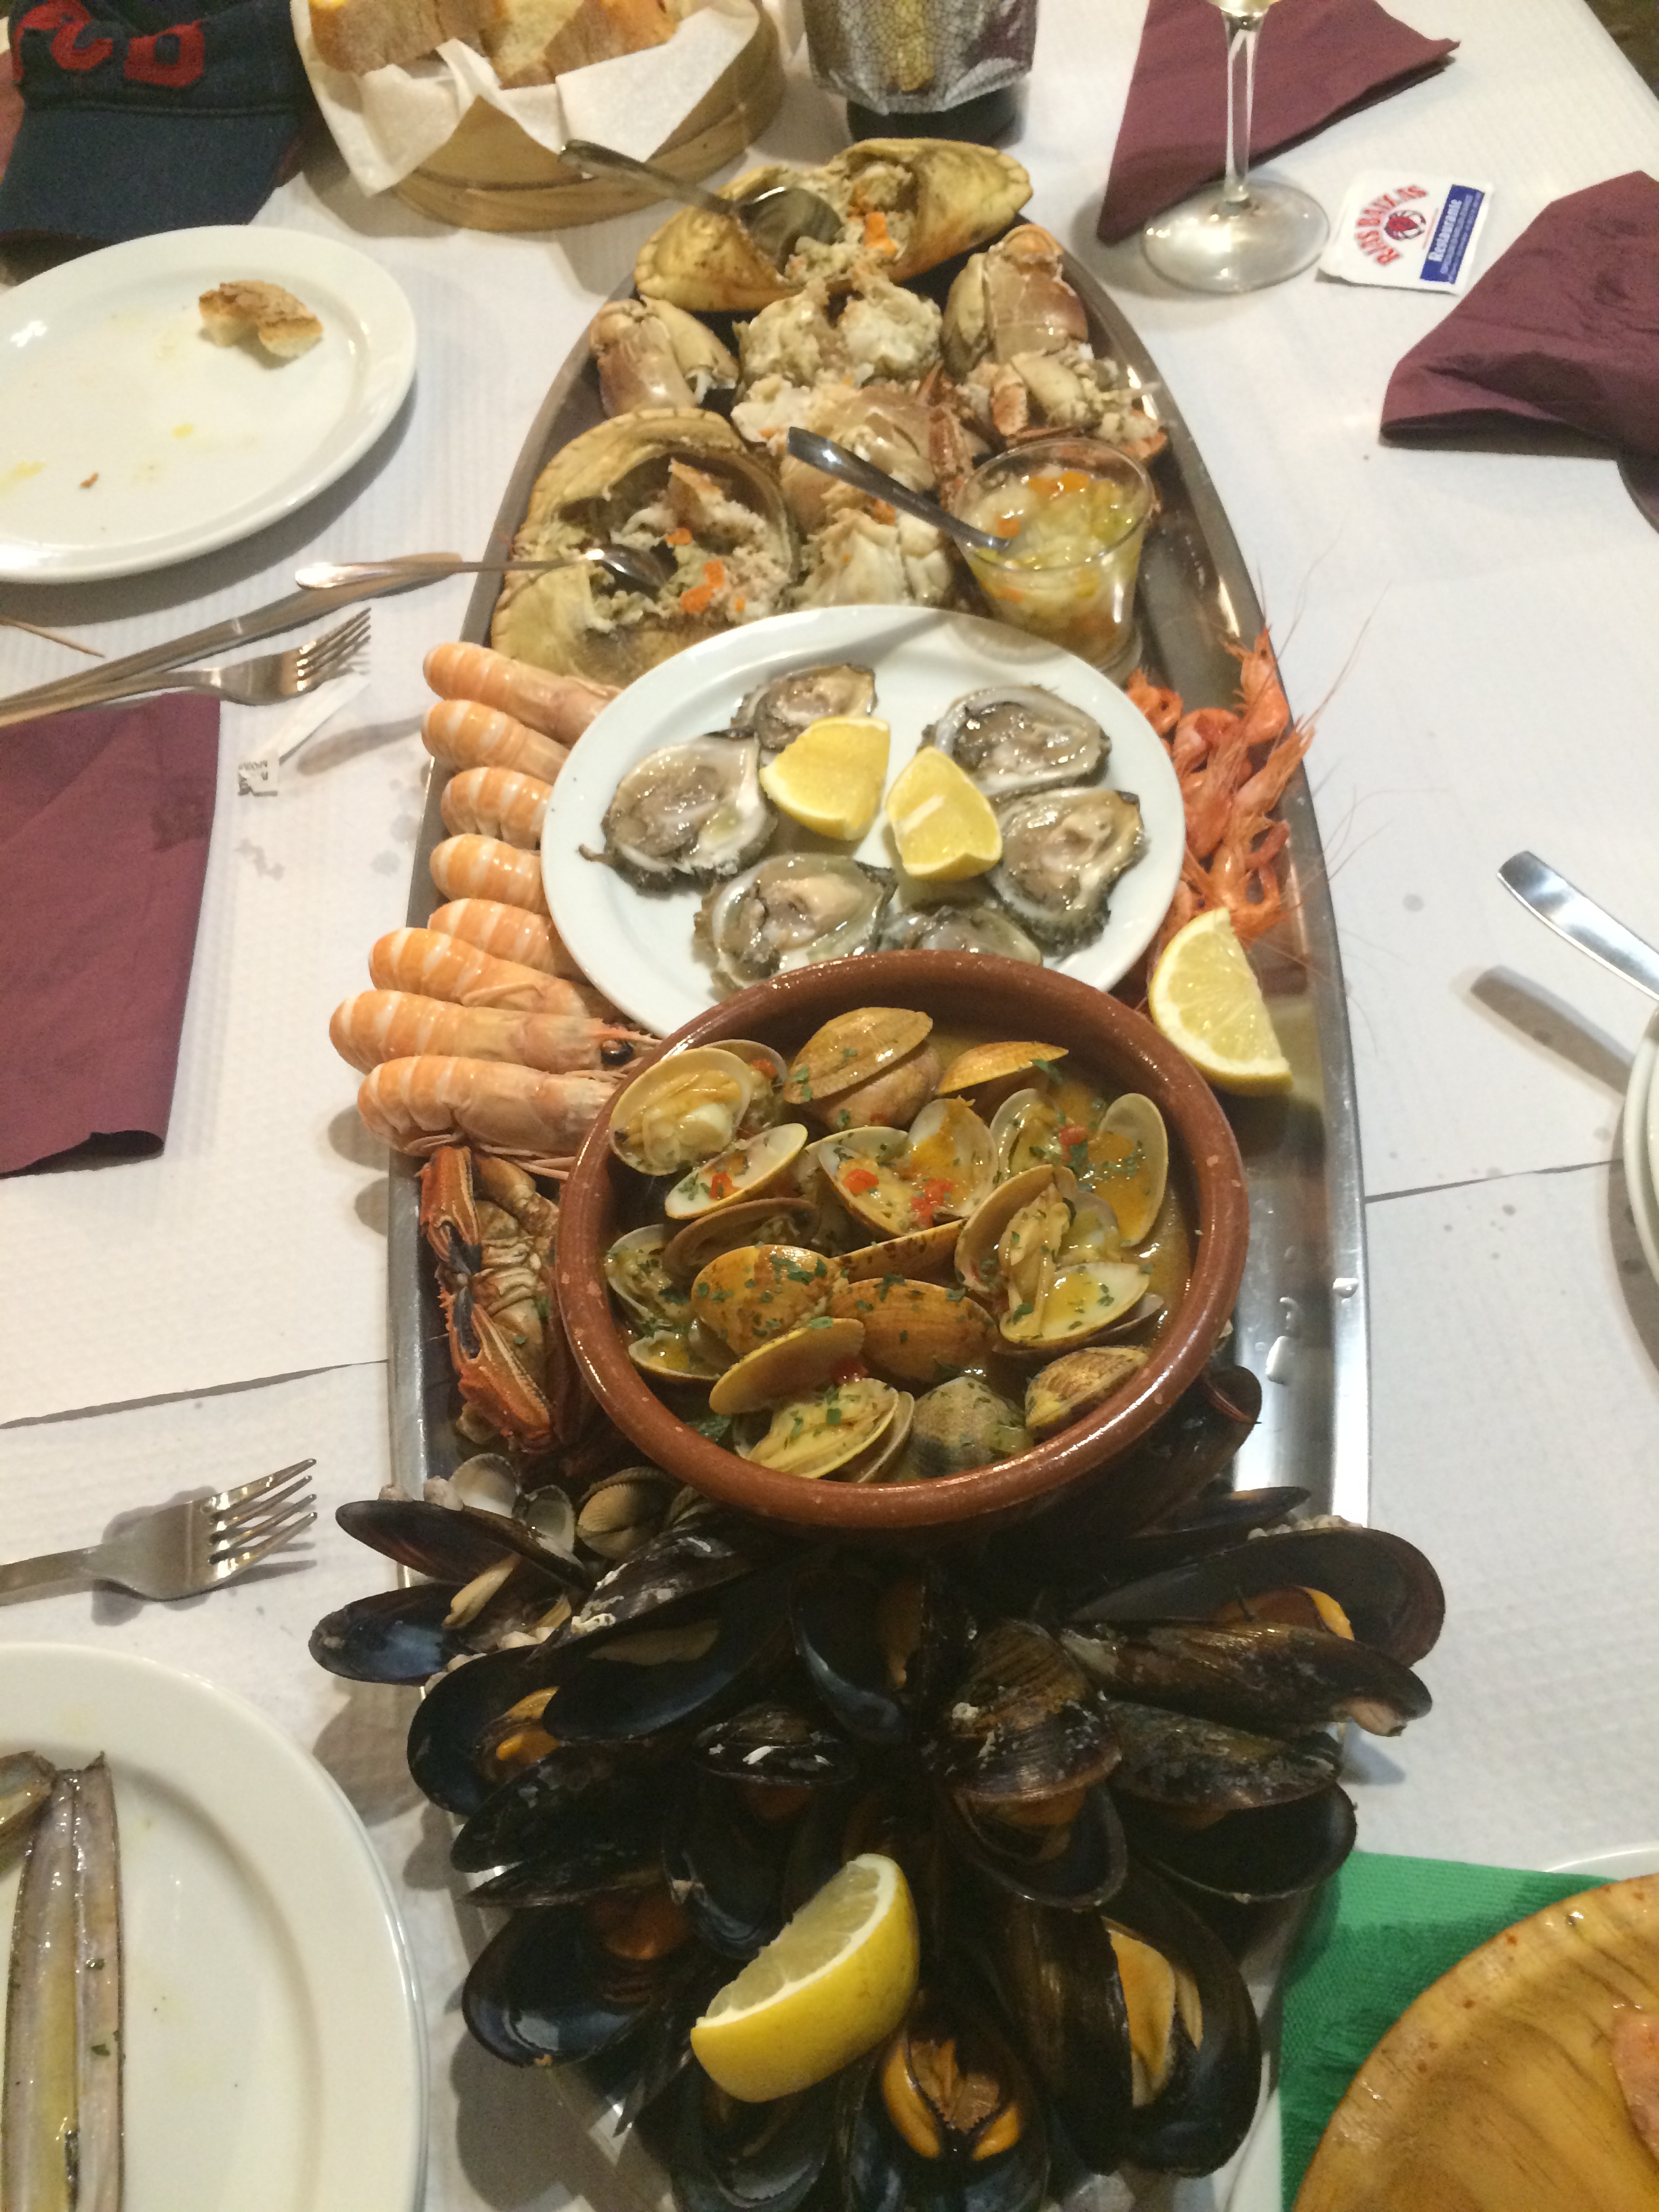 Restaurante Rías Baixas 2 (seafood restaurant) - Vigo, Spain